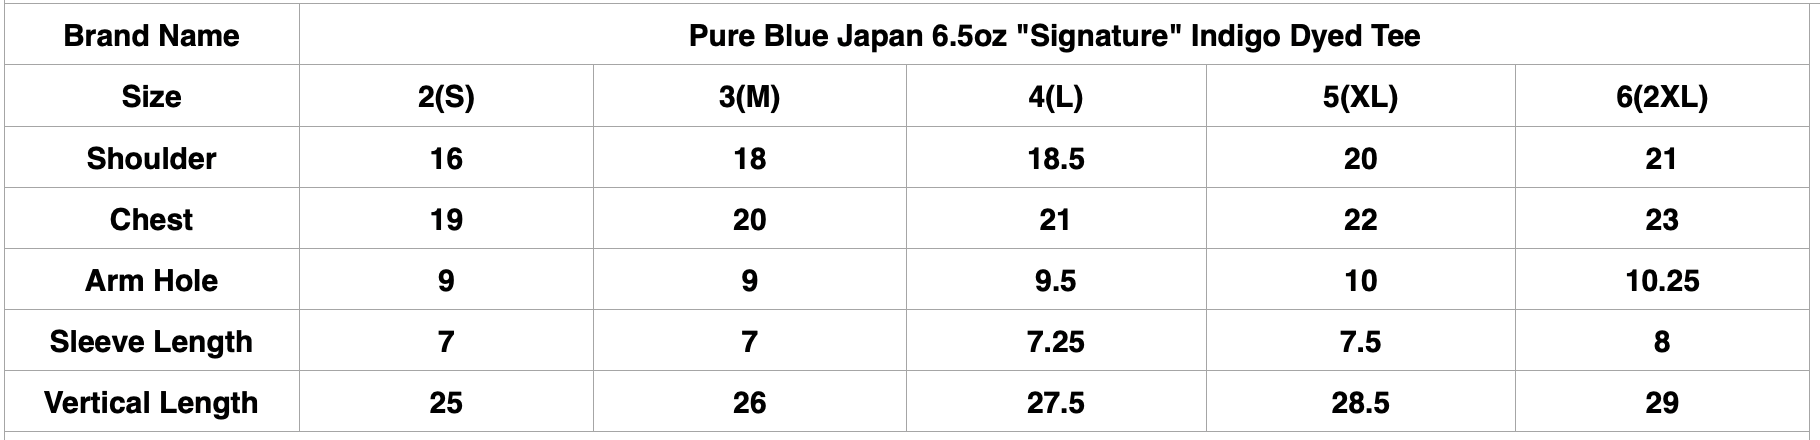 Pure Blue Japan 6.5oz "Signature" Indigo Dyed Tee (Greencast Indigo)